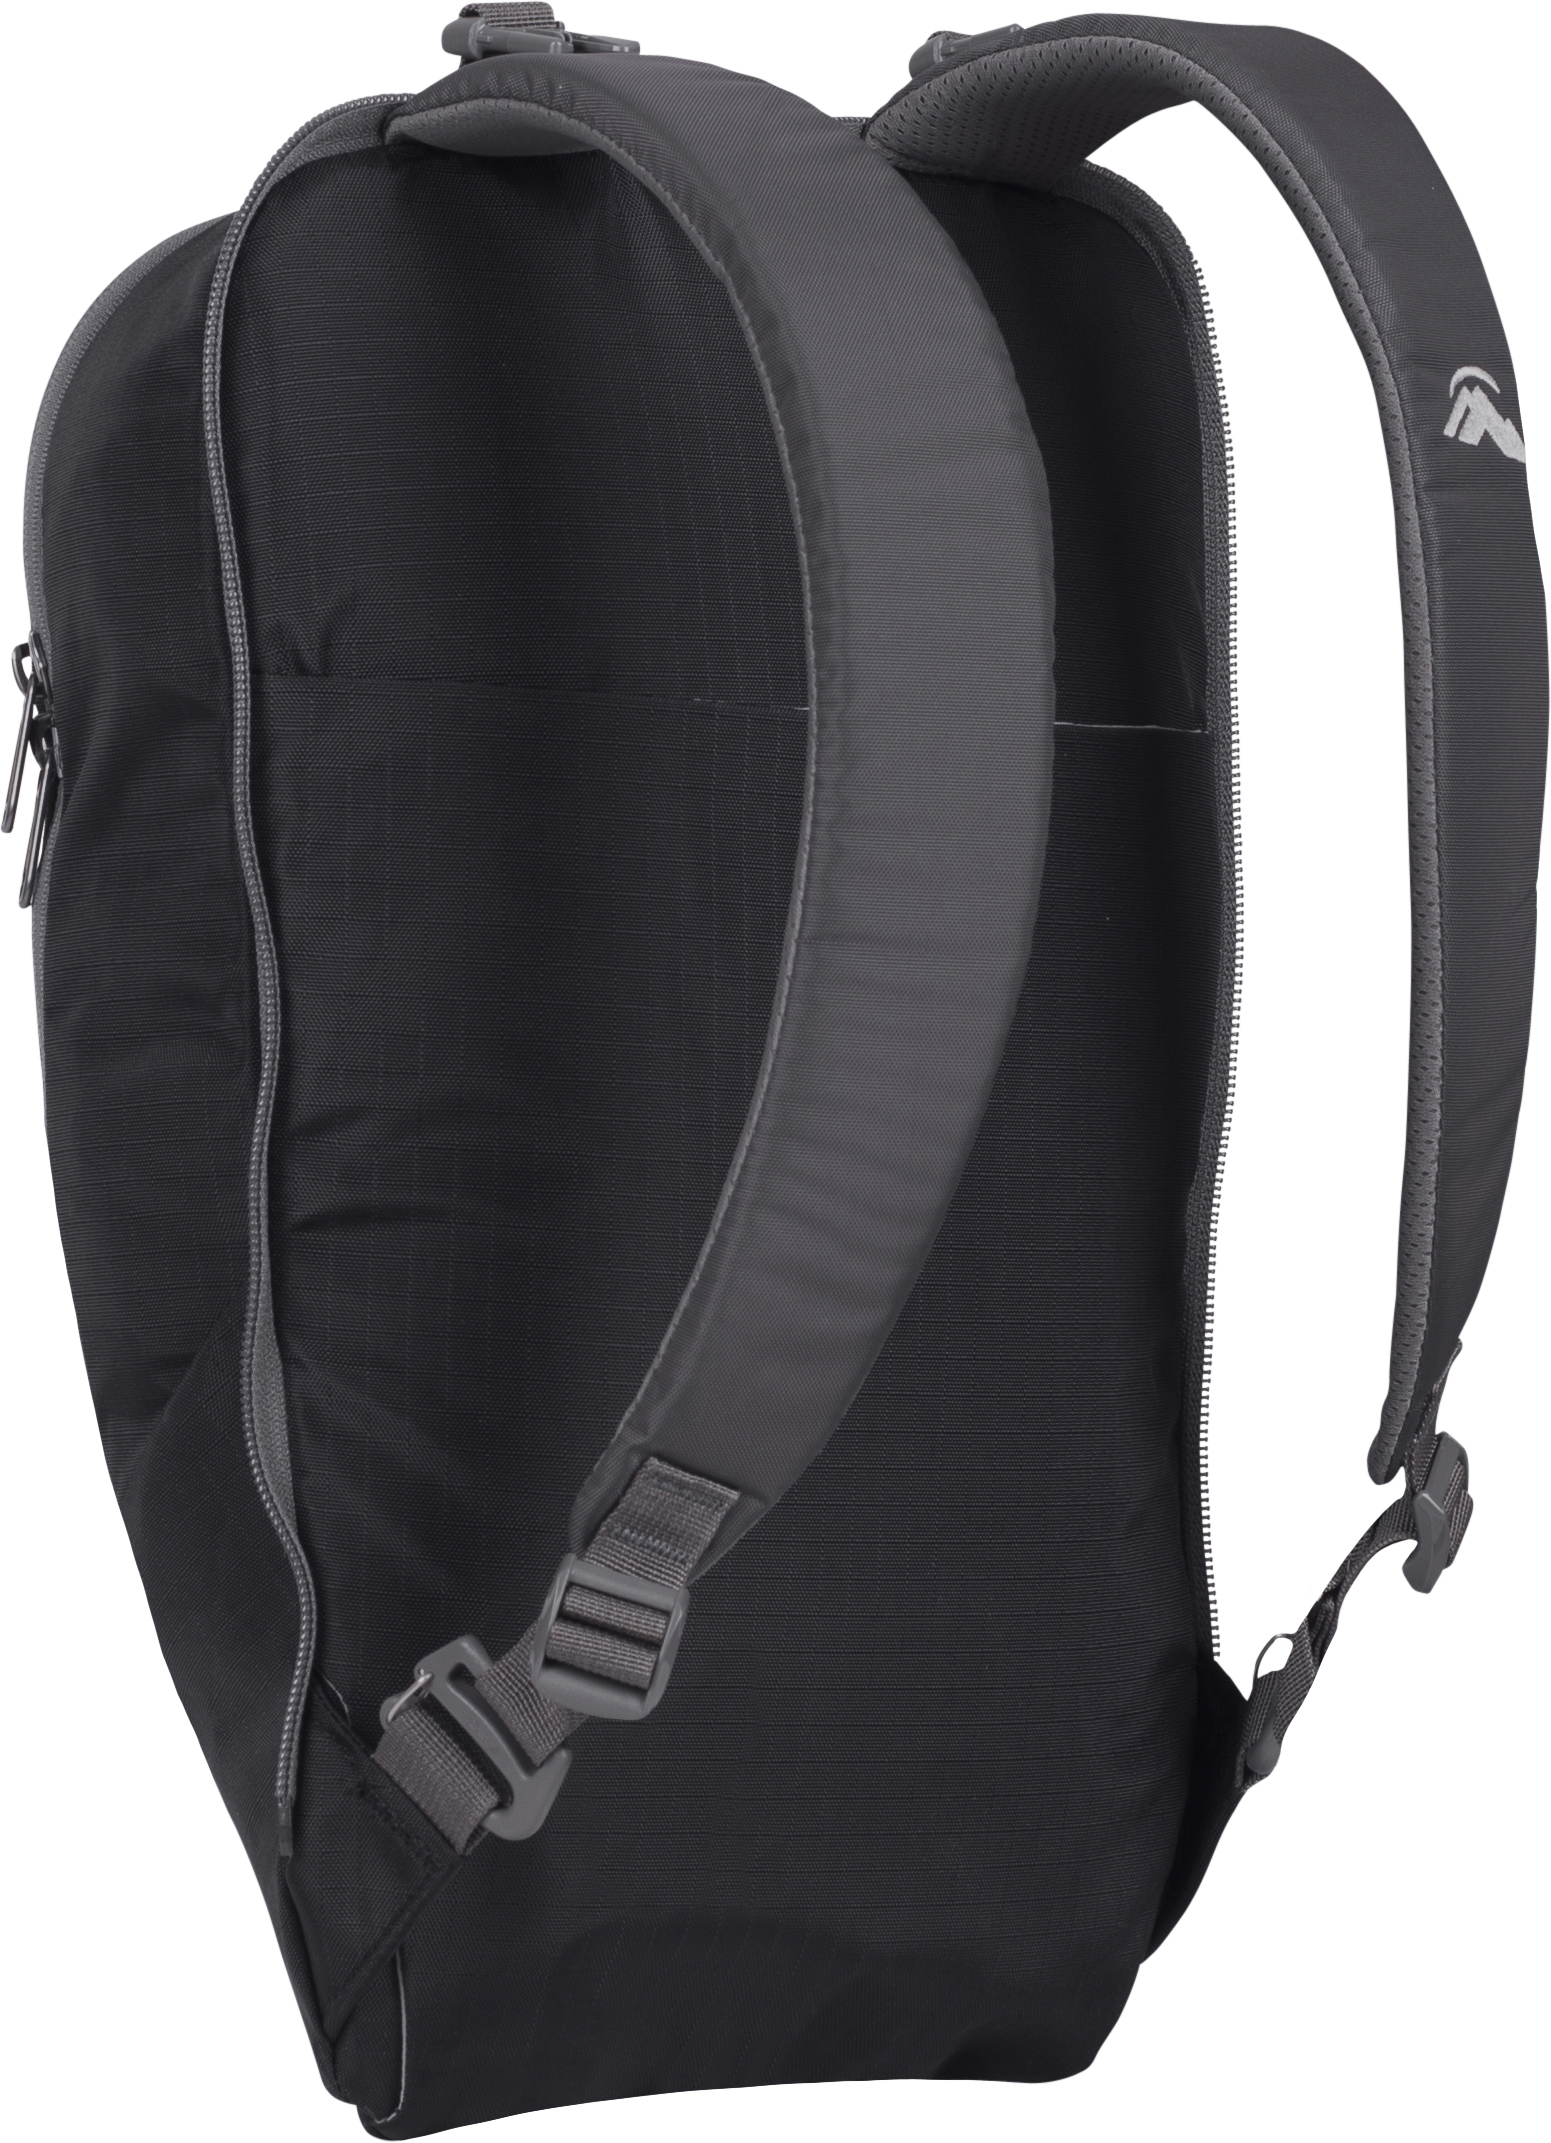 Macpac Vamoose V2 Child Carrier Backpack